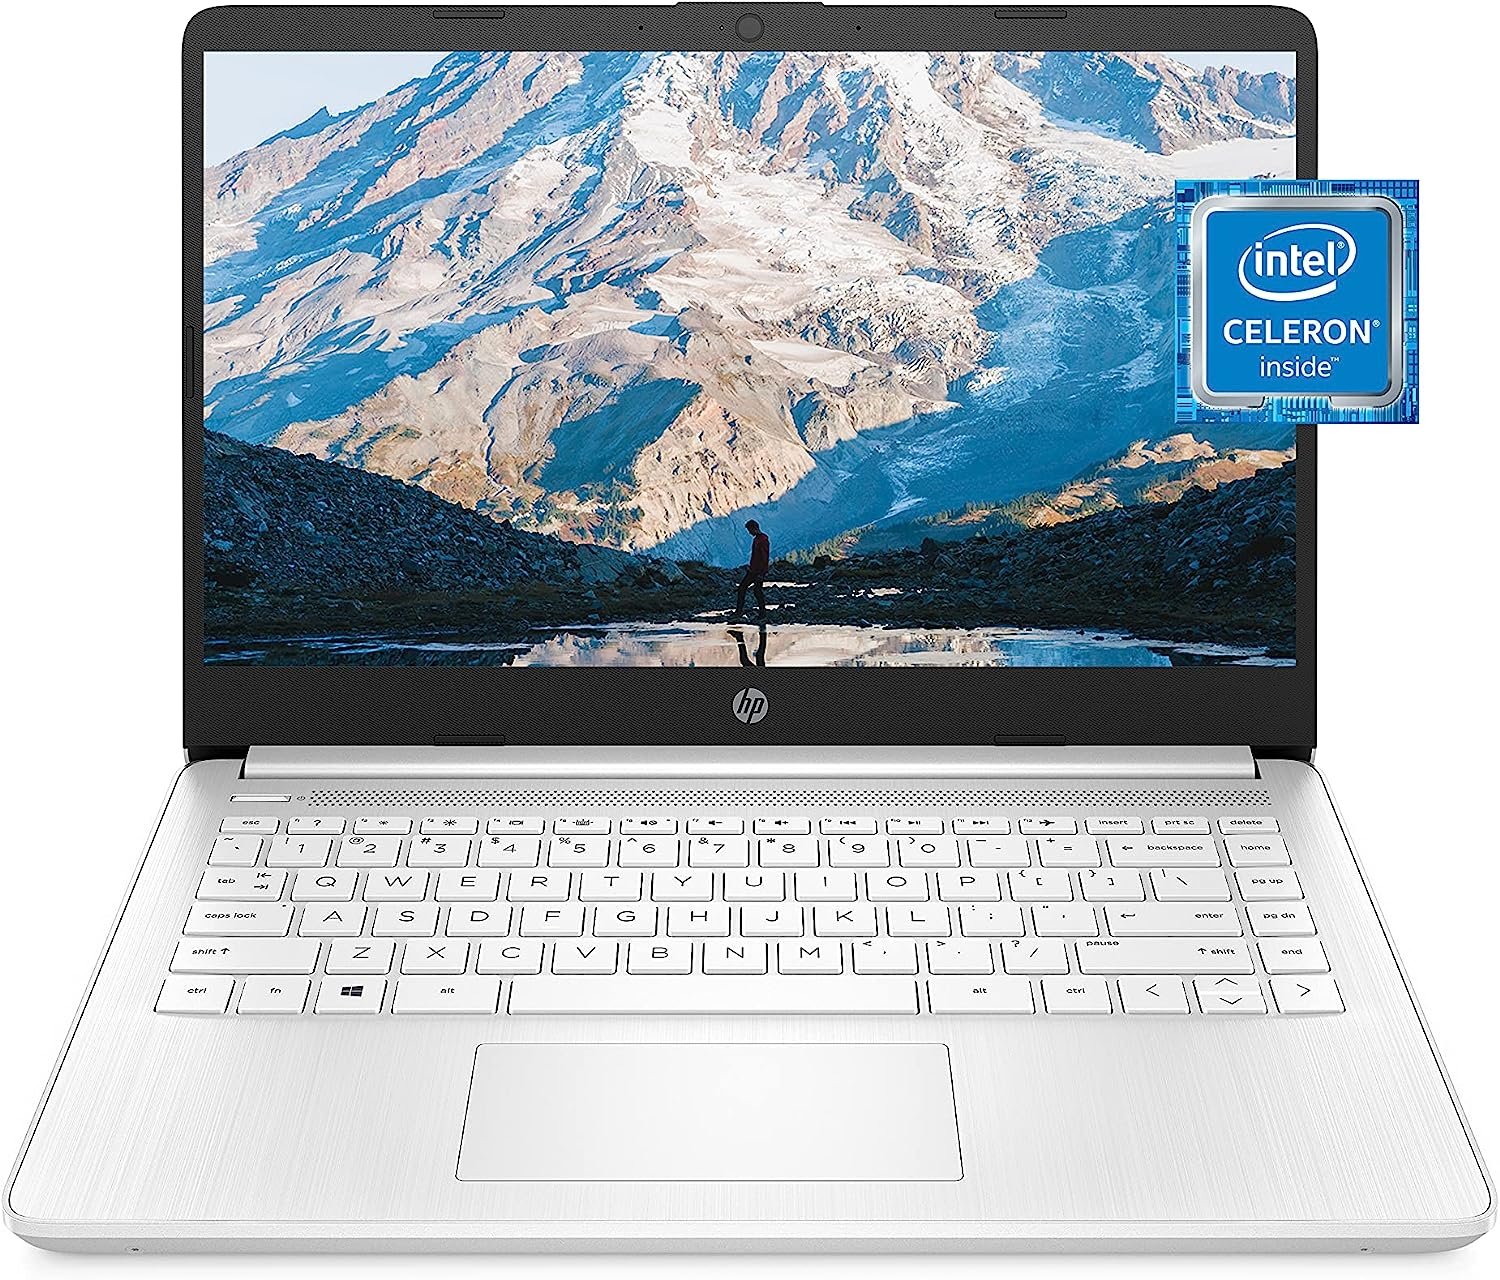 HP 14 Laptop